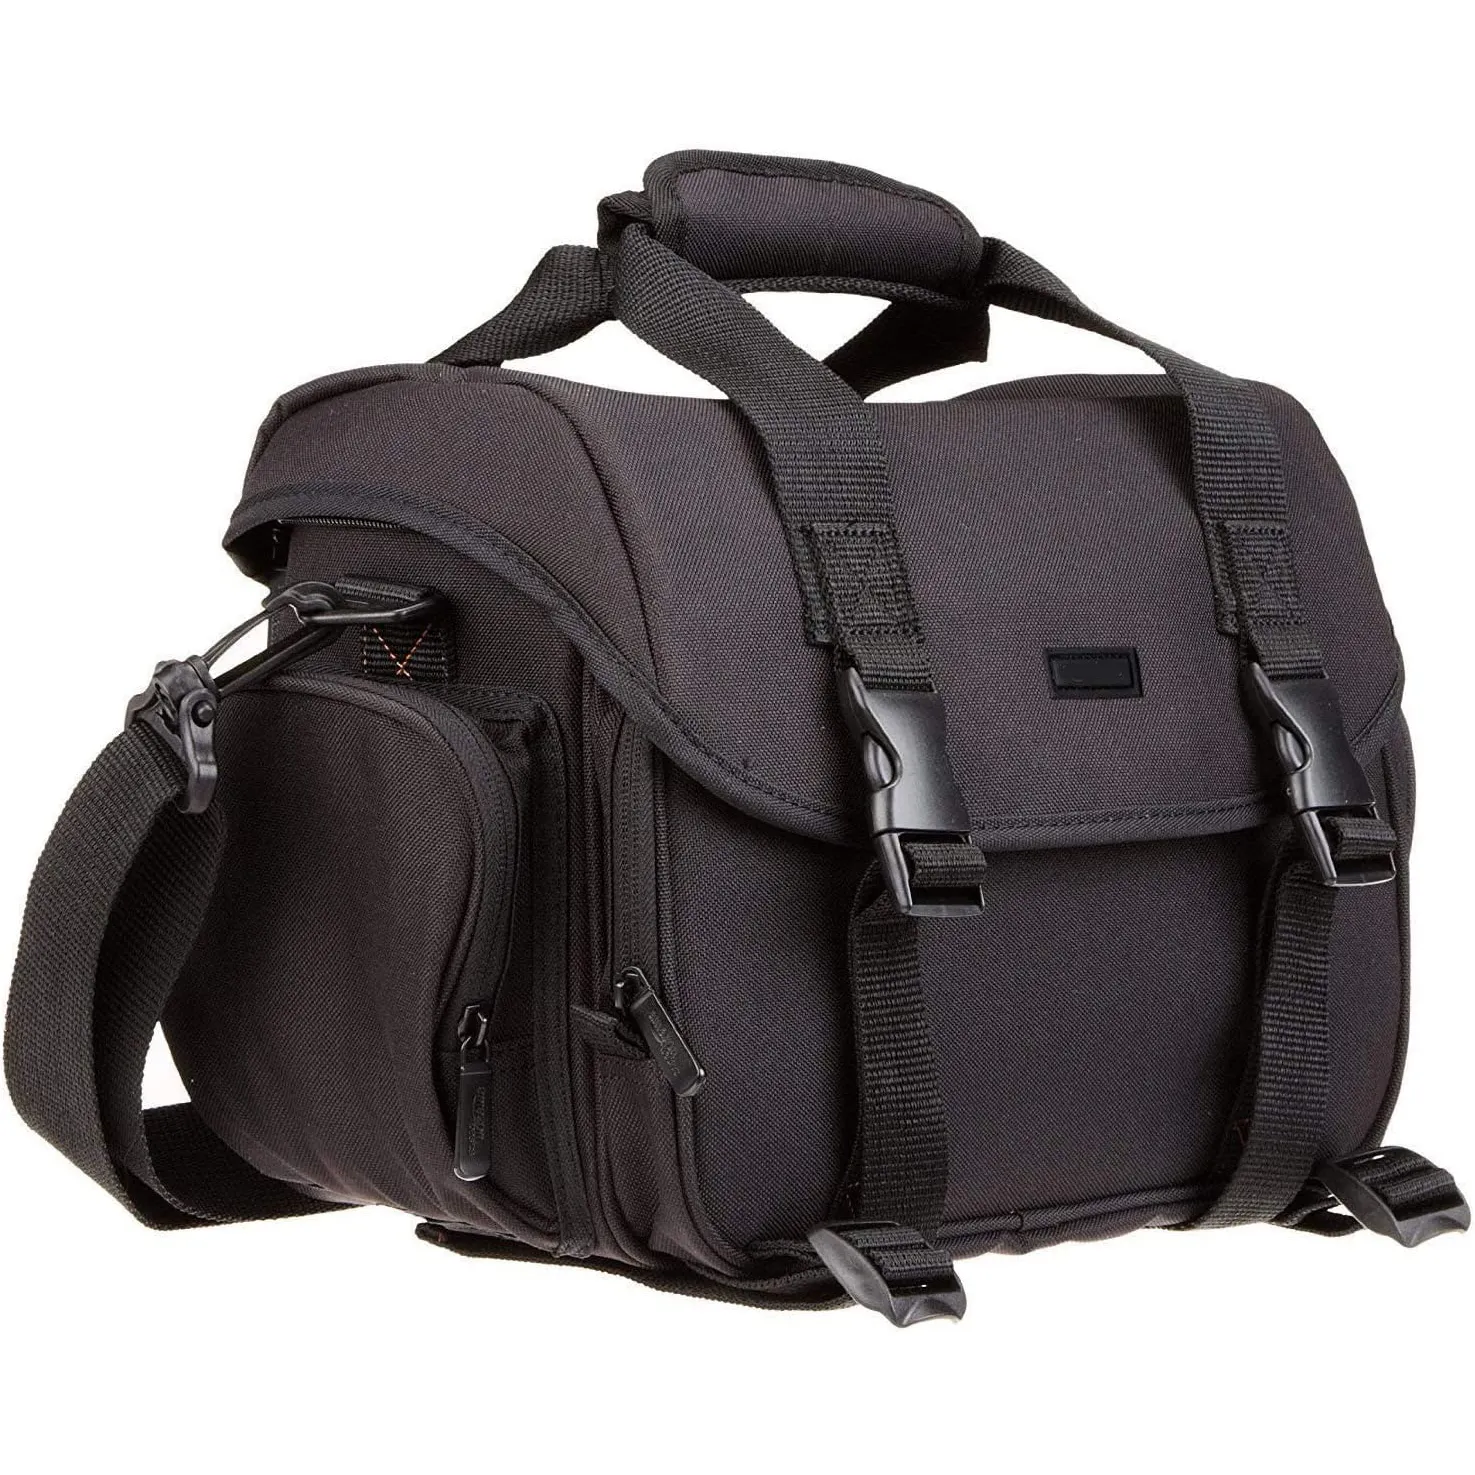 Waterproof Camera Case Shoulder Video Camera Bag Photography Bag For DSLR Canon Nikon Sony Lens Pouch Photography Bag